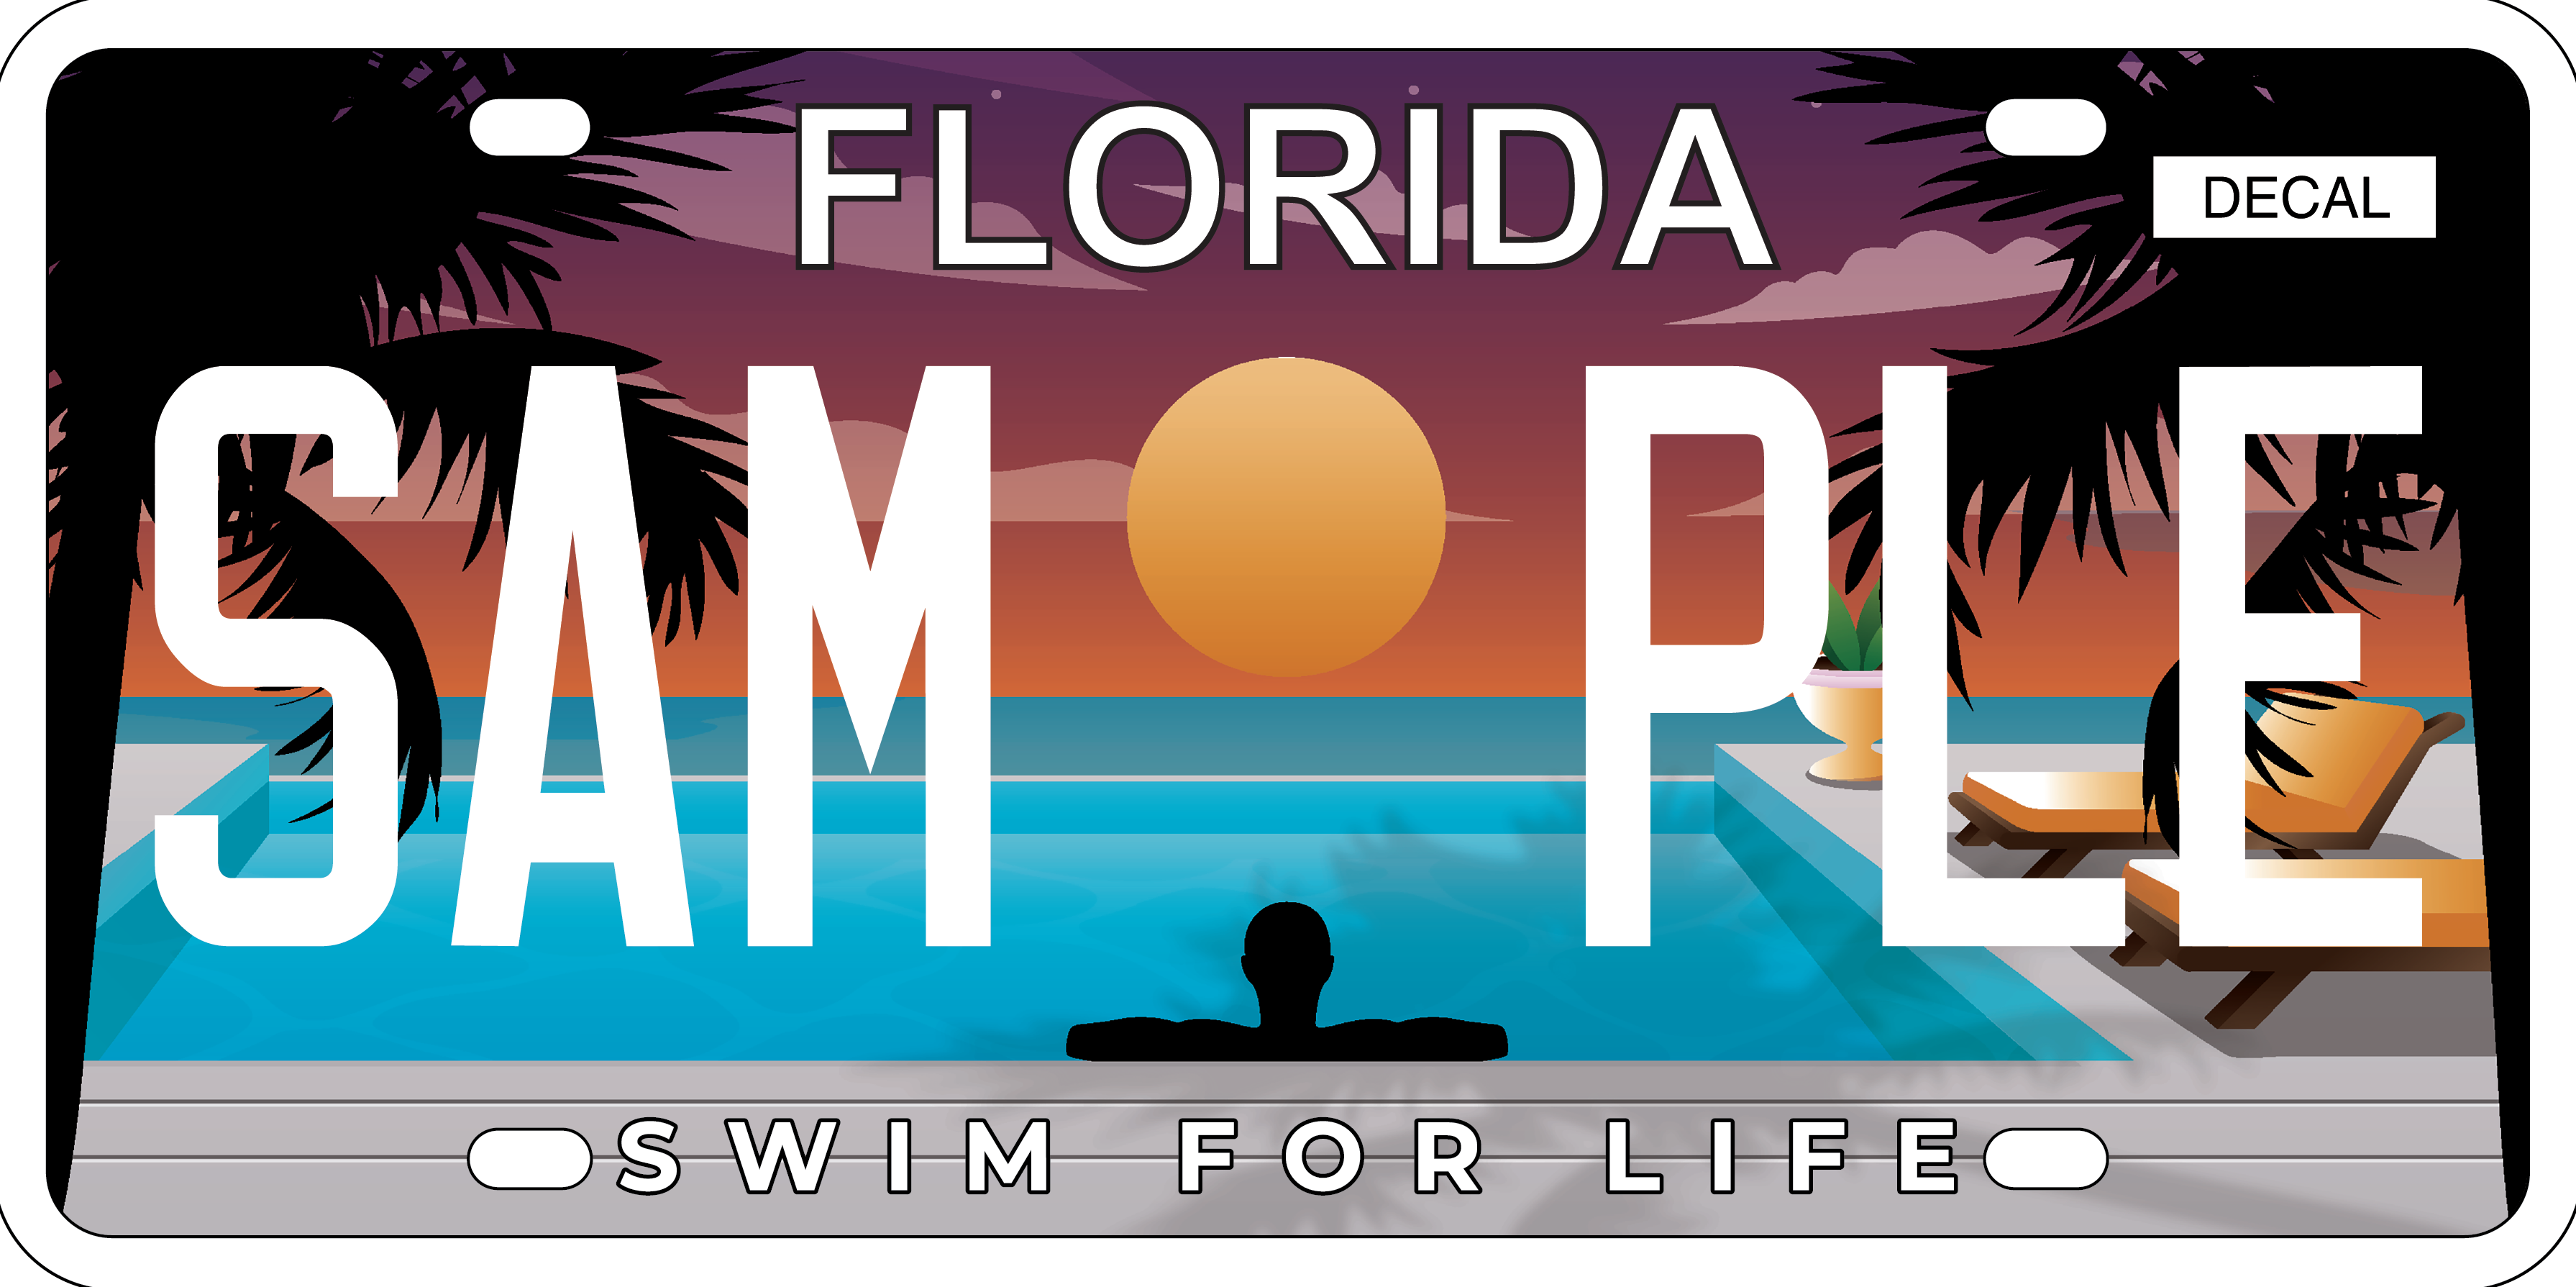 Florida Swims - 501(c)(3)